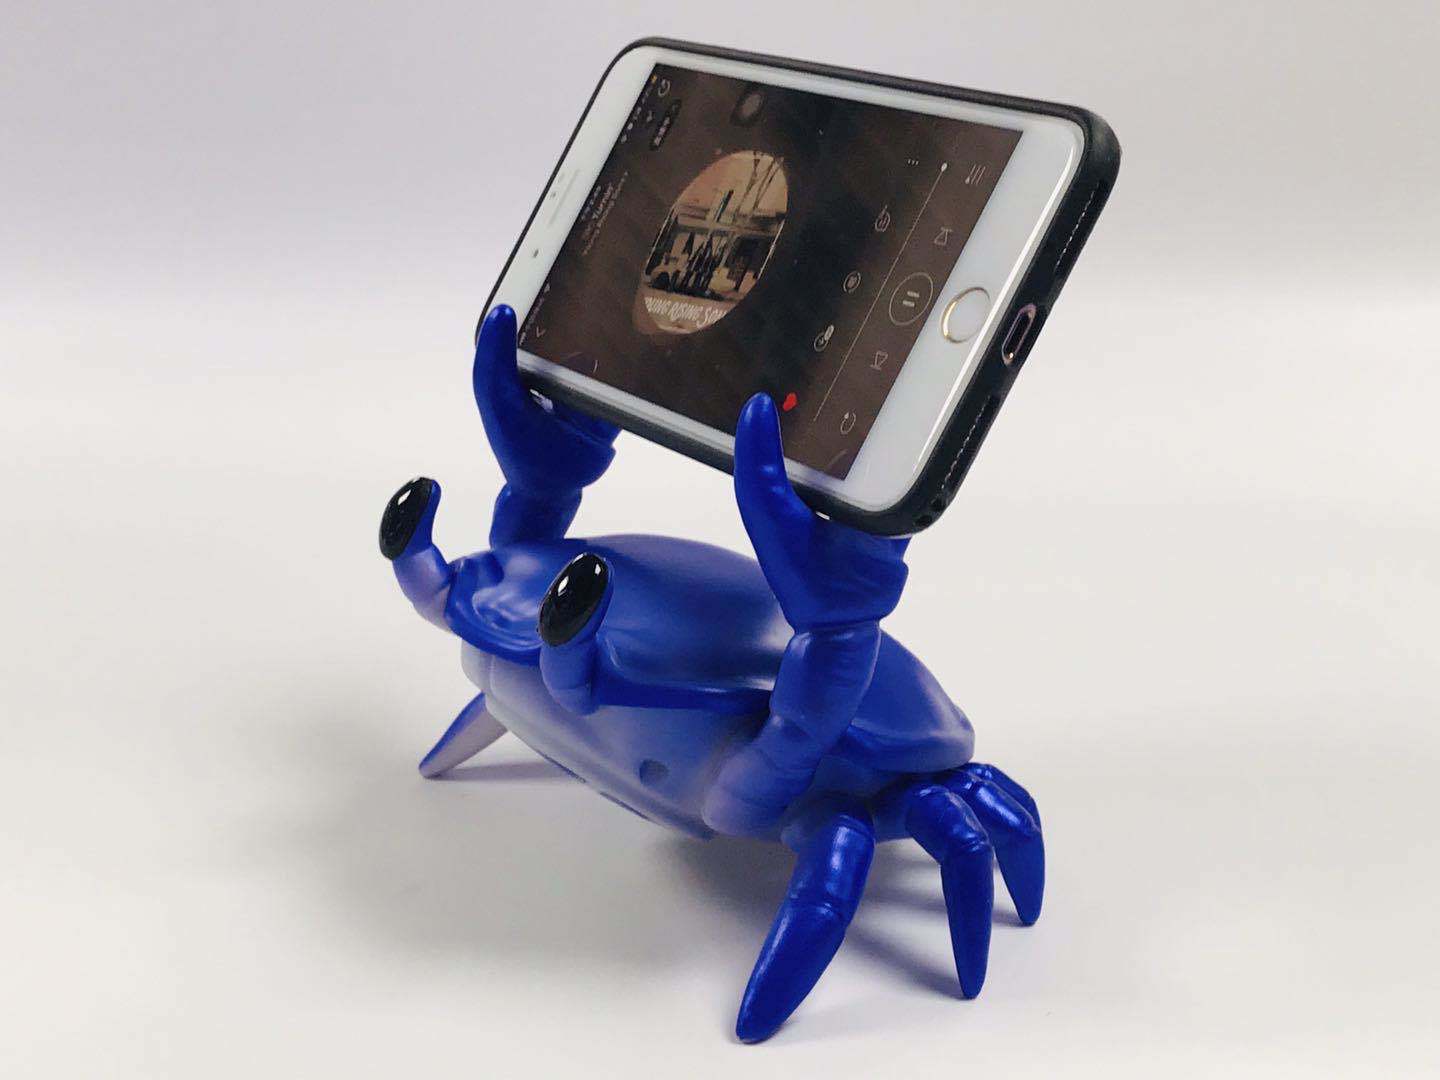 Crab Wireless Bluetooth Speaker Desktop Mobile Phone Holder